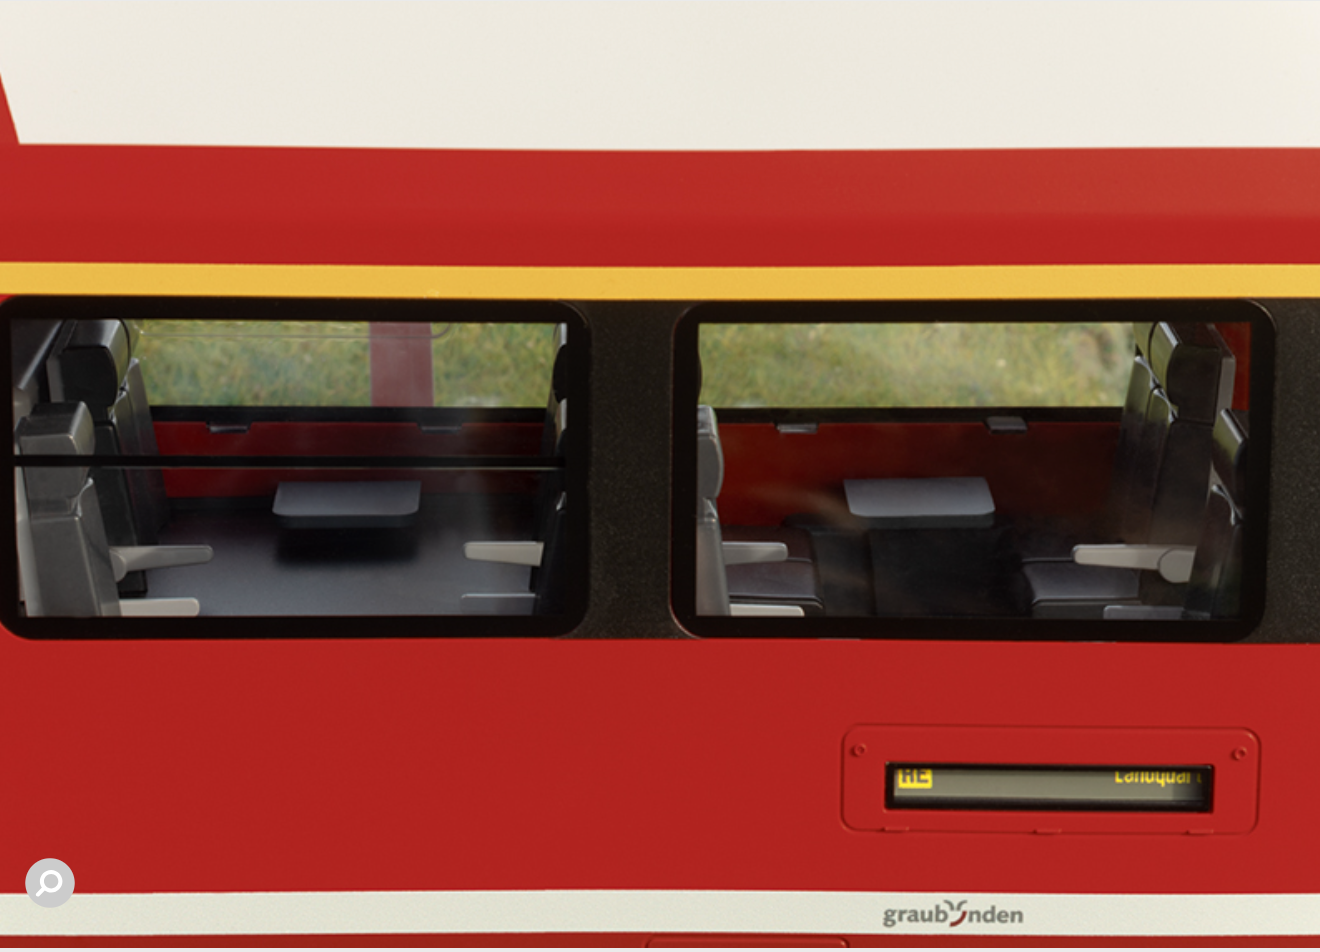 LGB RhB Class ABe 4/16 "Capricorn" Powered Rail Car Train Set - 23100